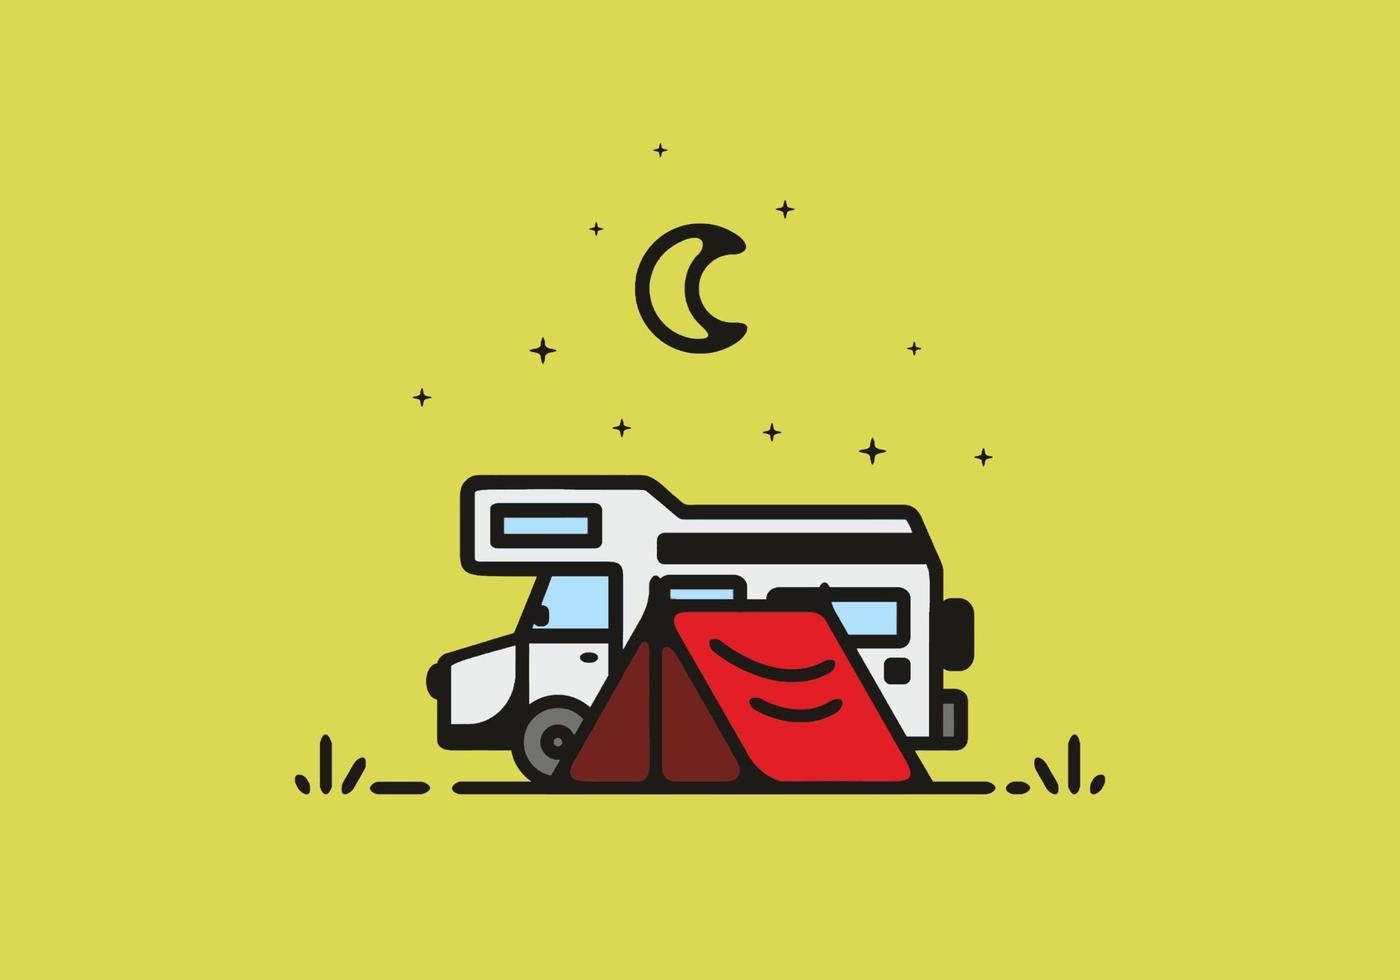 illustration de camping camping car simple vecteur